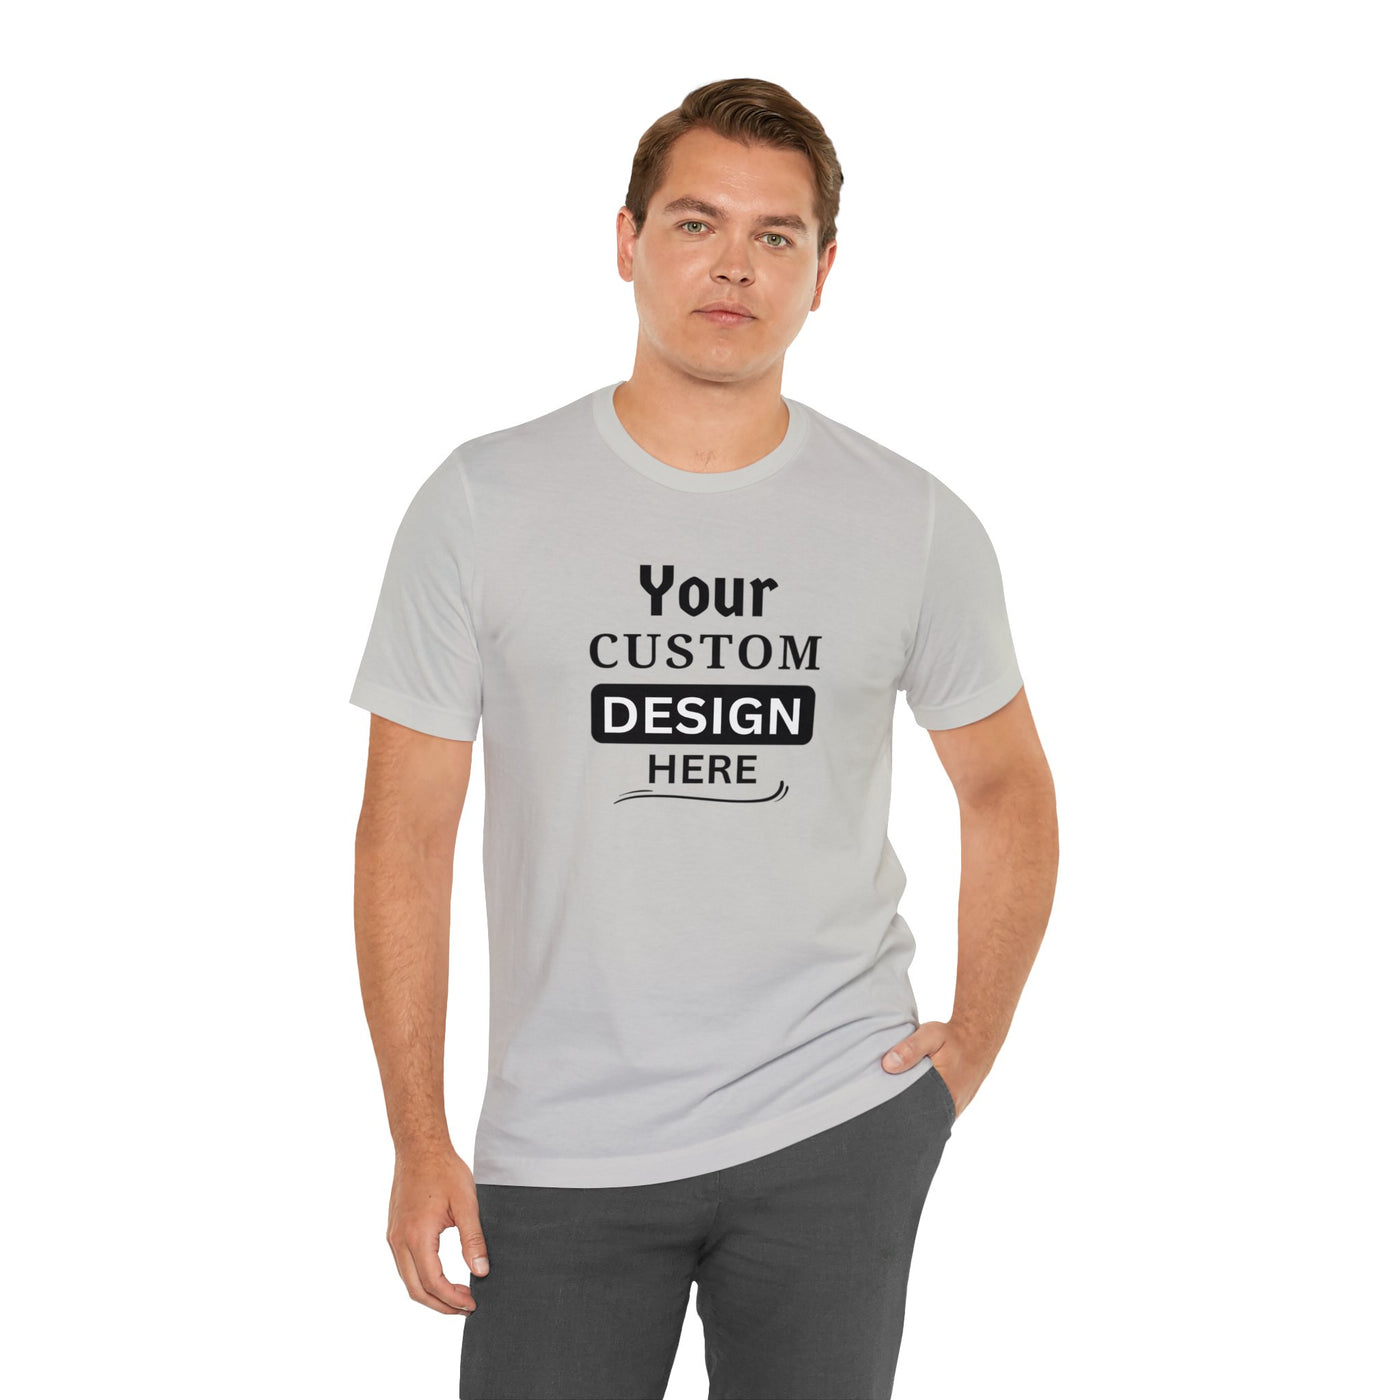 Camiseta de manga corta de jersey unisex personalizada